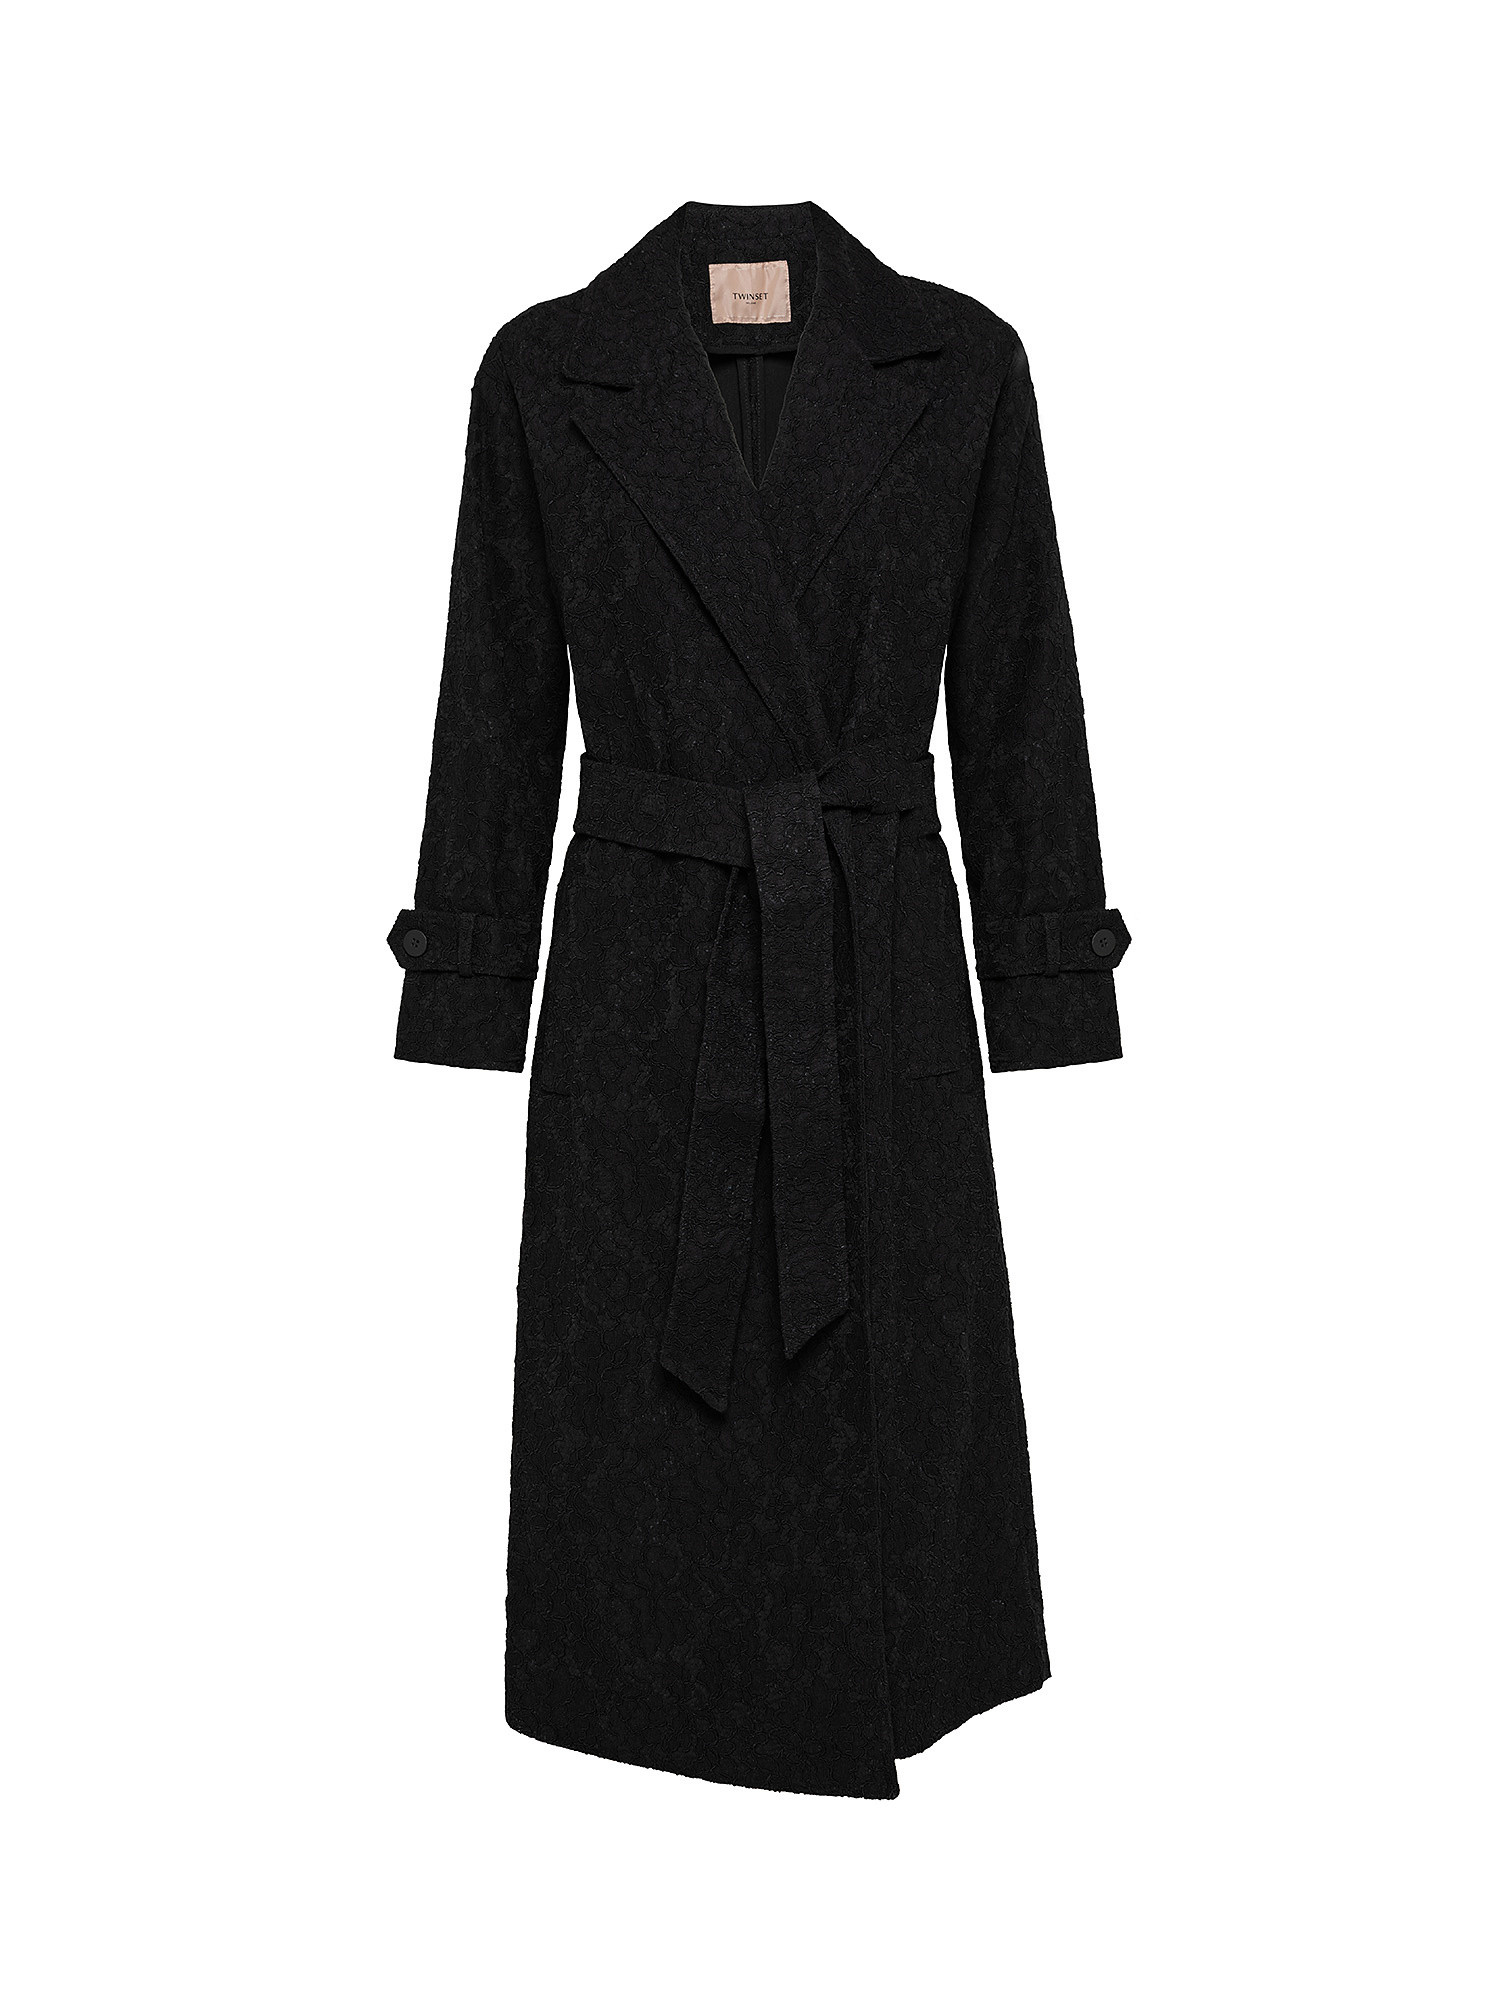 Macrame coat, Black, large image number 0